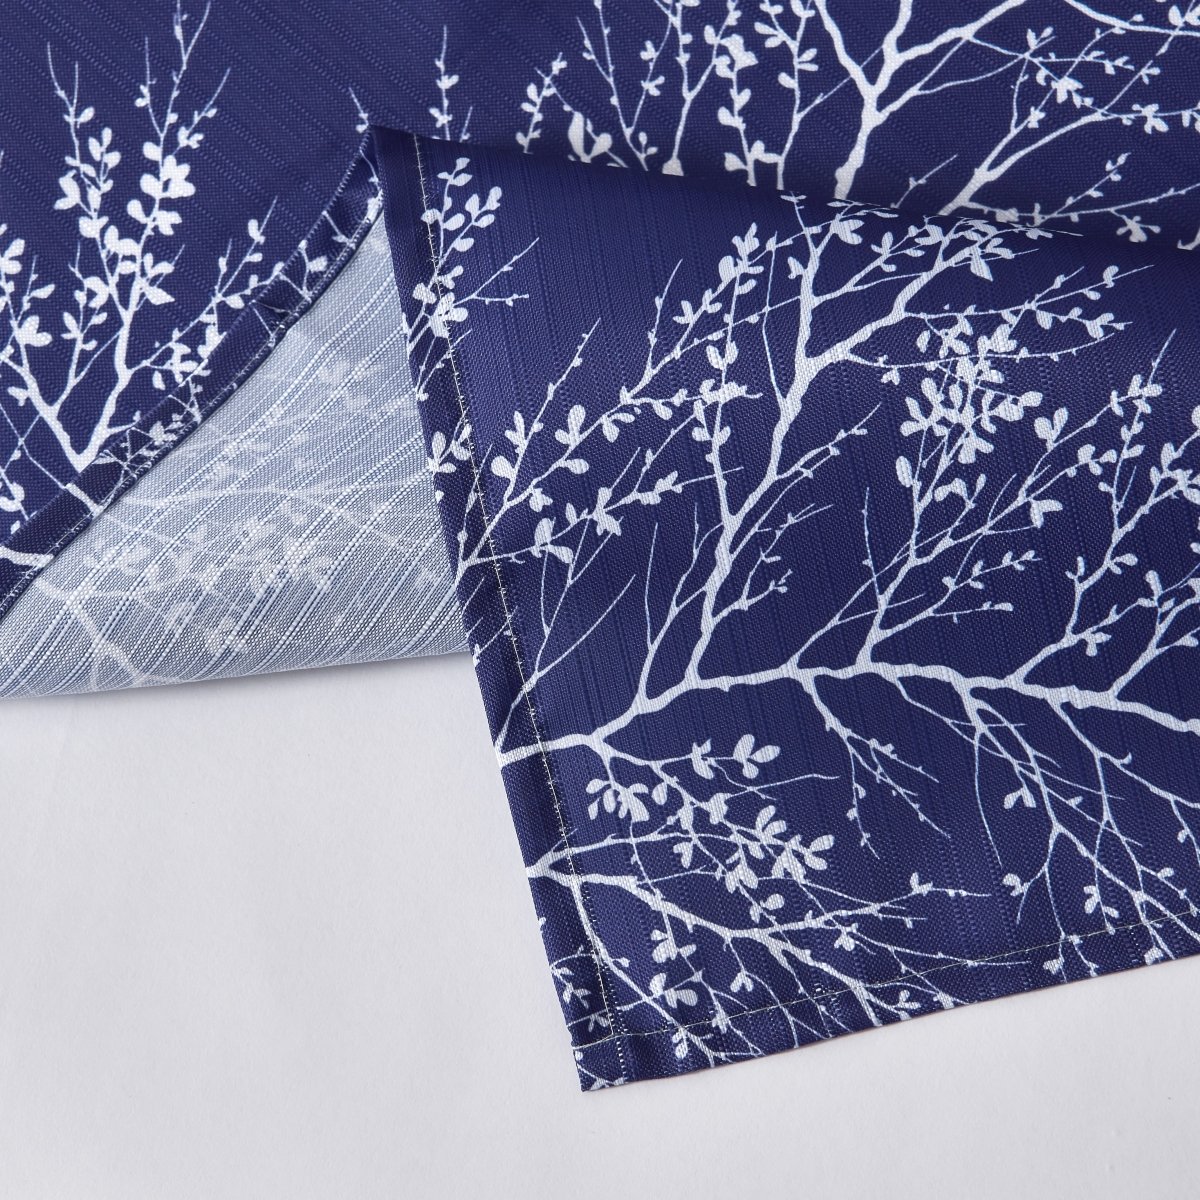 1pc Polyester Shower Curtain Set - Spirit Linen